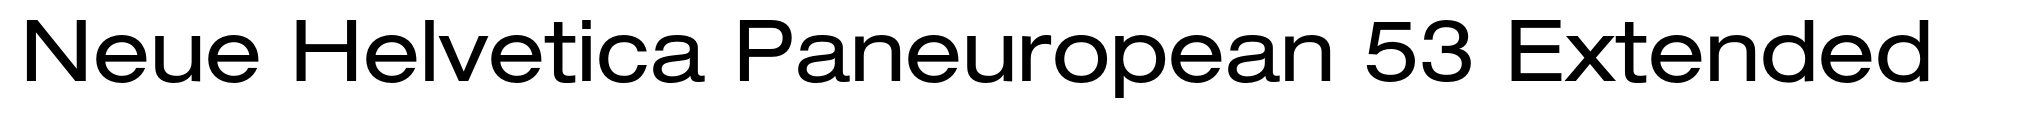 Neue Helvetica Paneuropean 53 Extended image